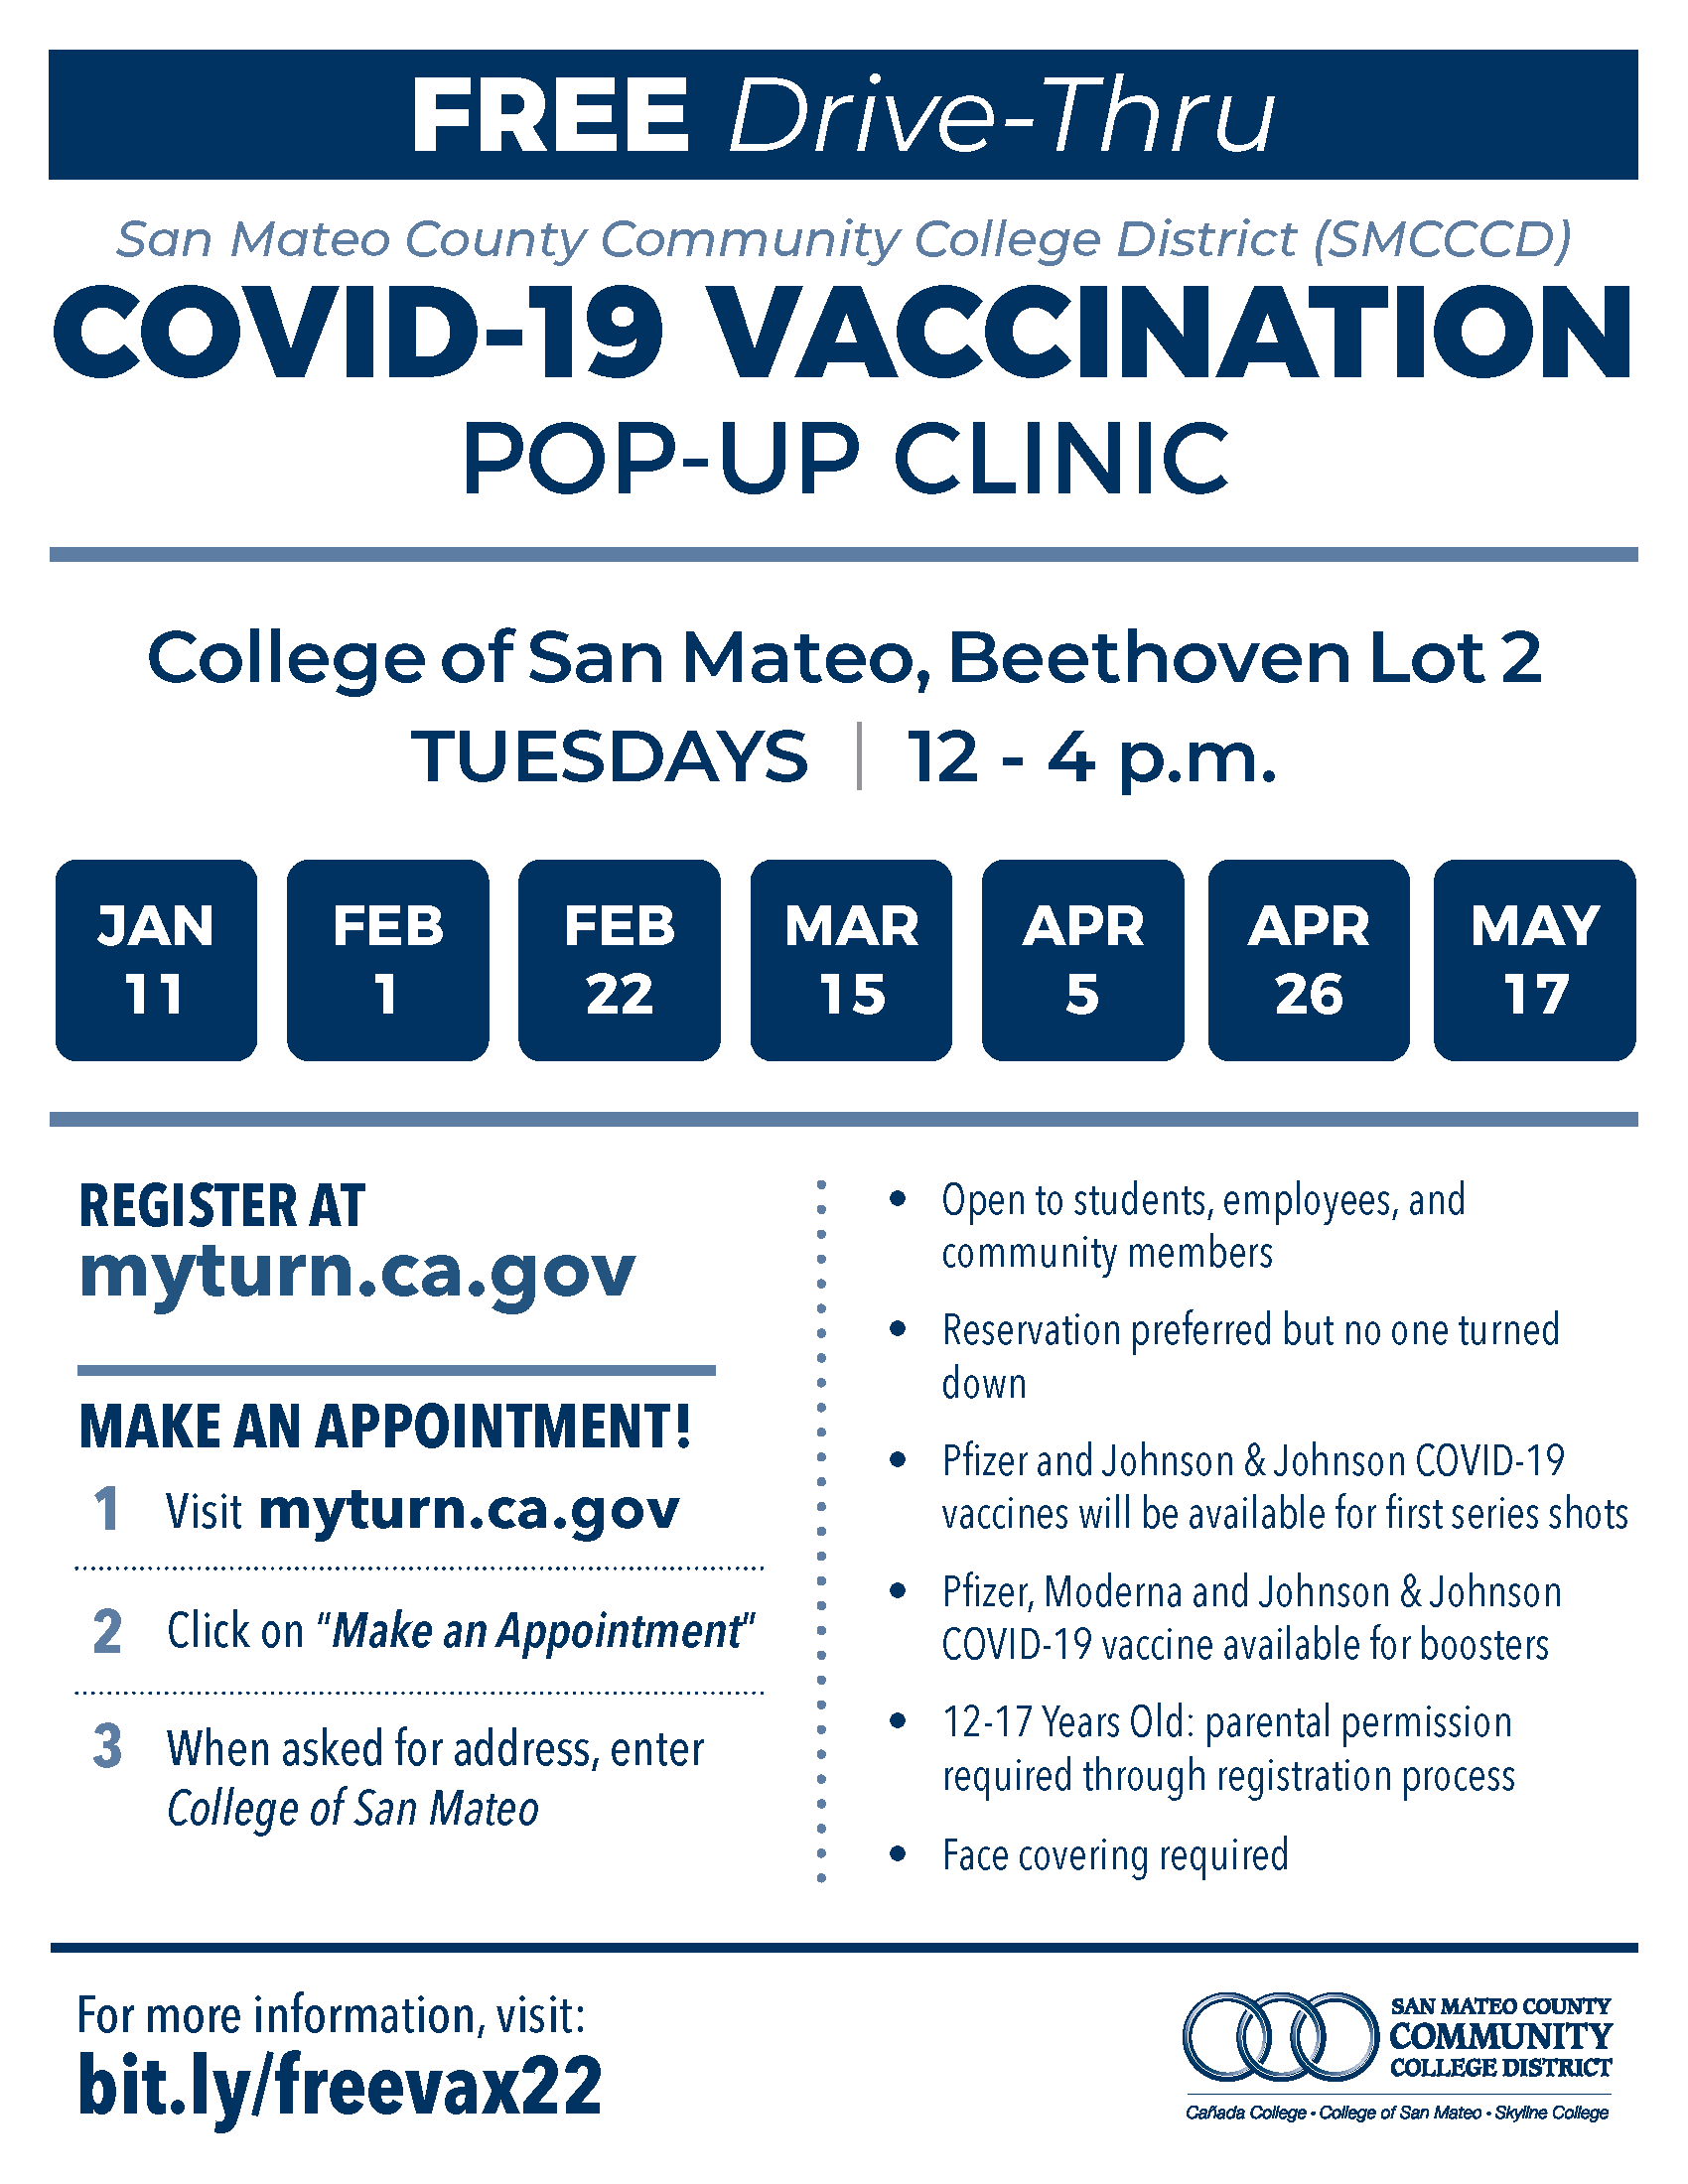 CSM Vaccination Pop Up Clinic Info